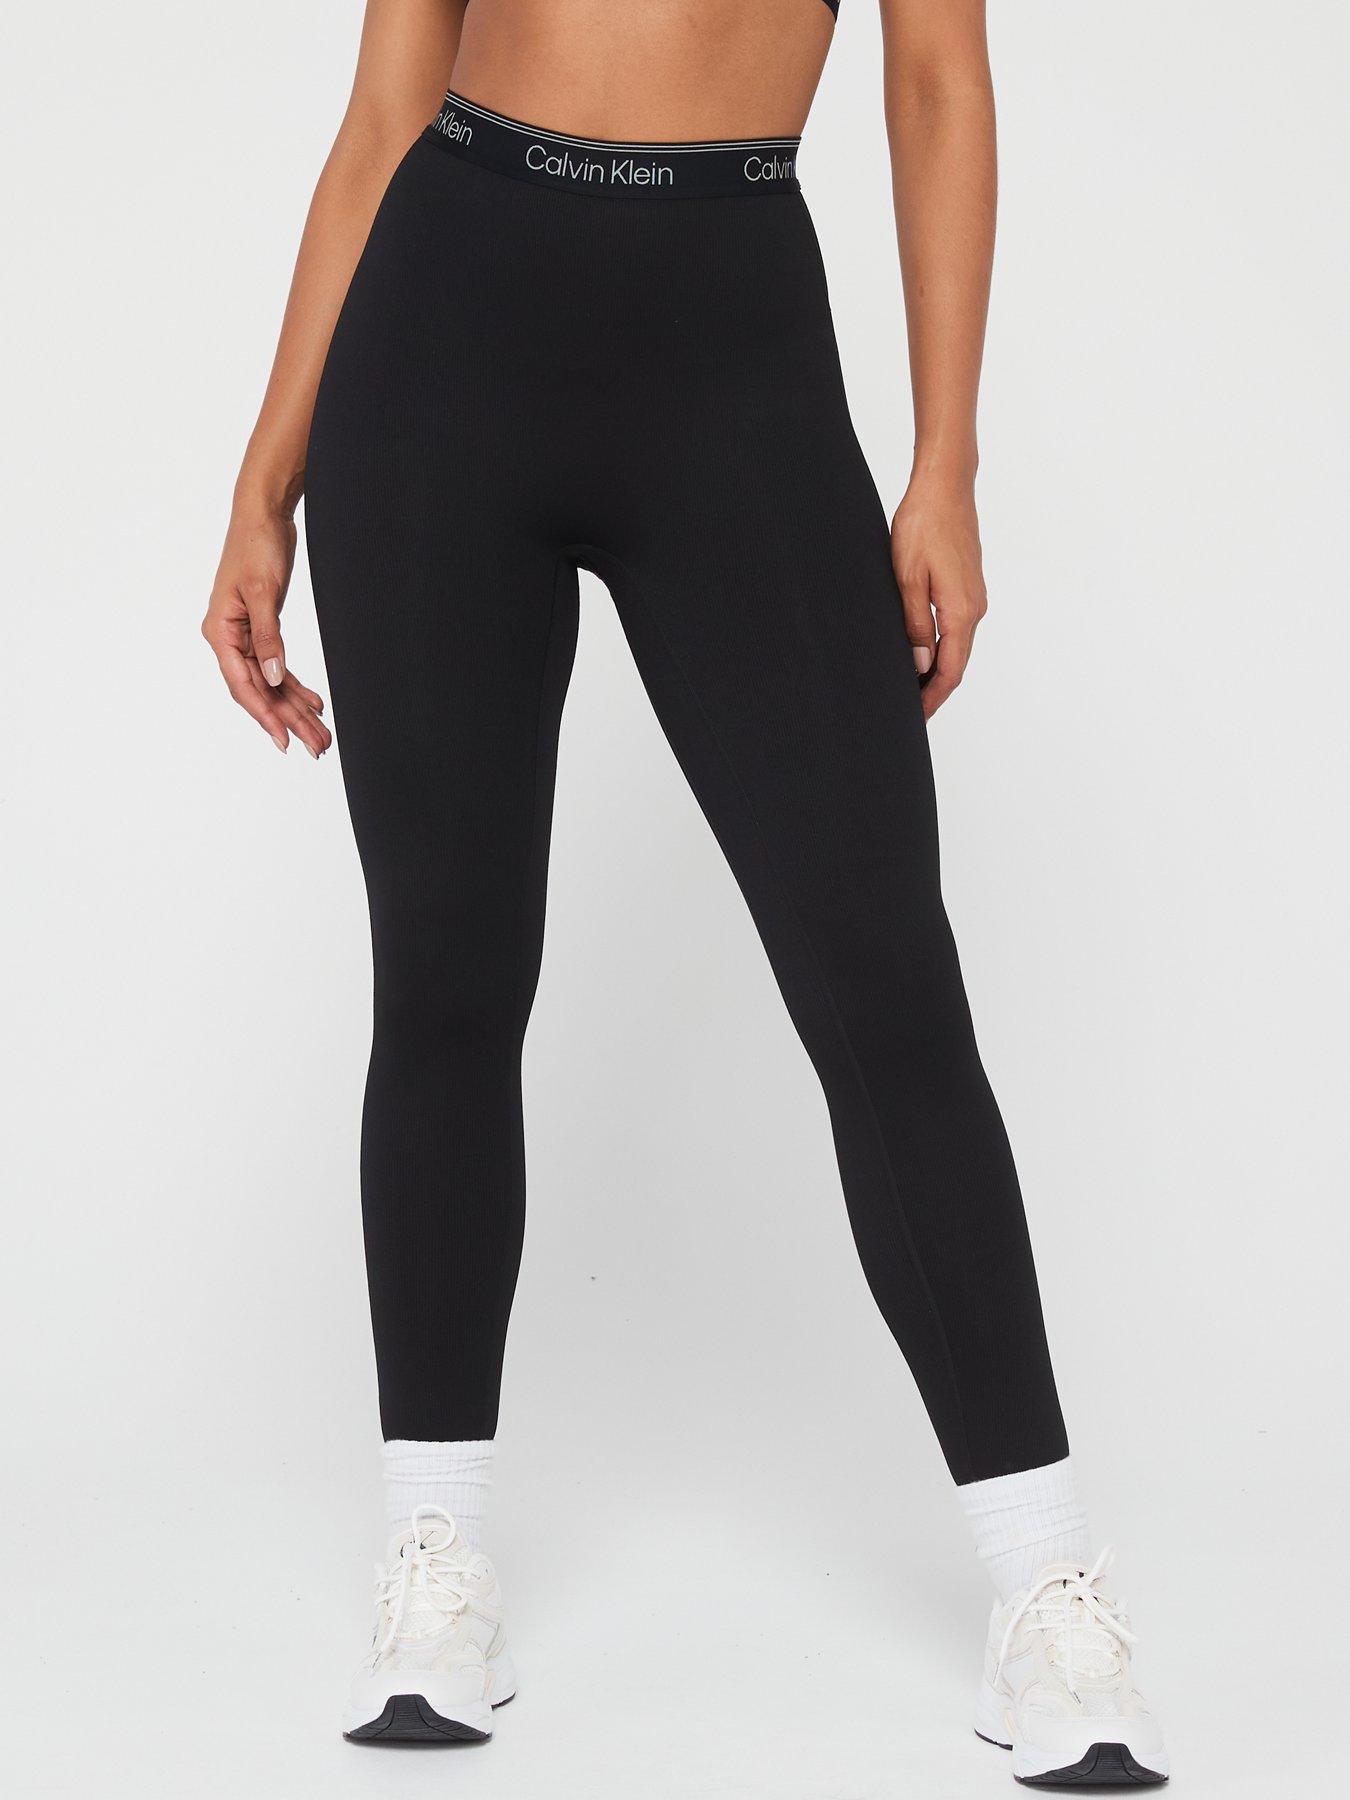 Calvin Klein Performance Women's Logo High Waisted 7/8 Tights / Leggings -  Black